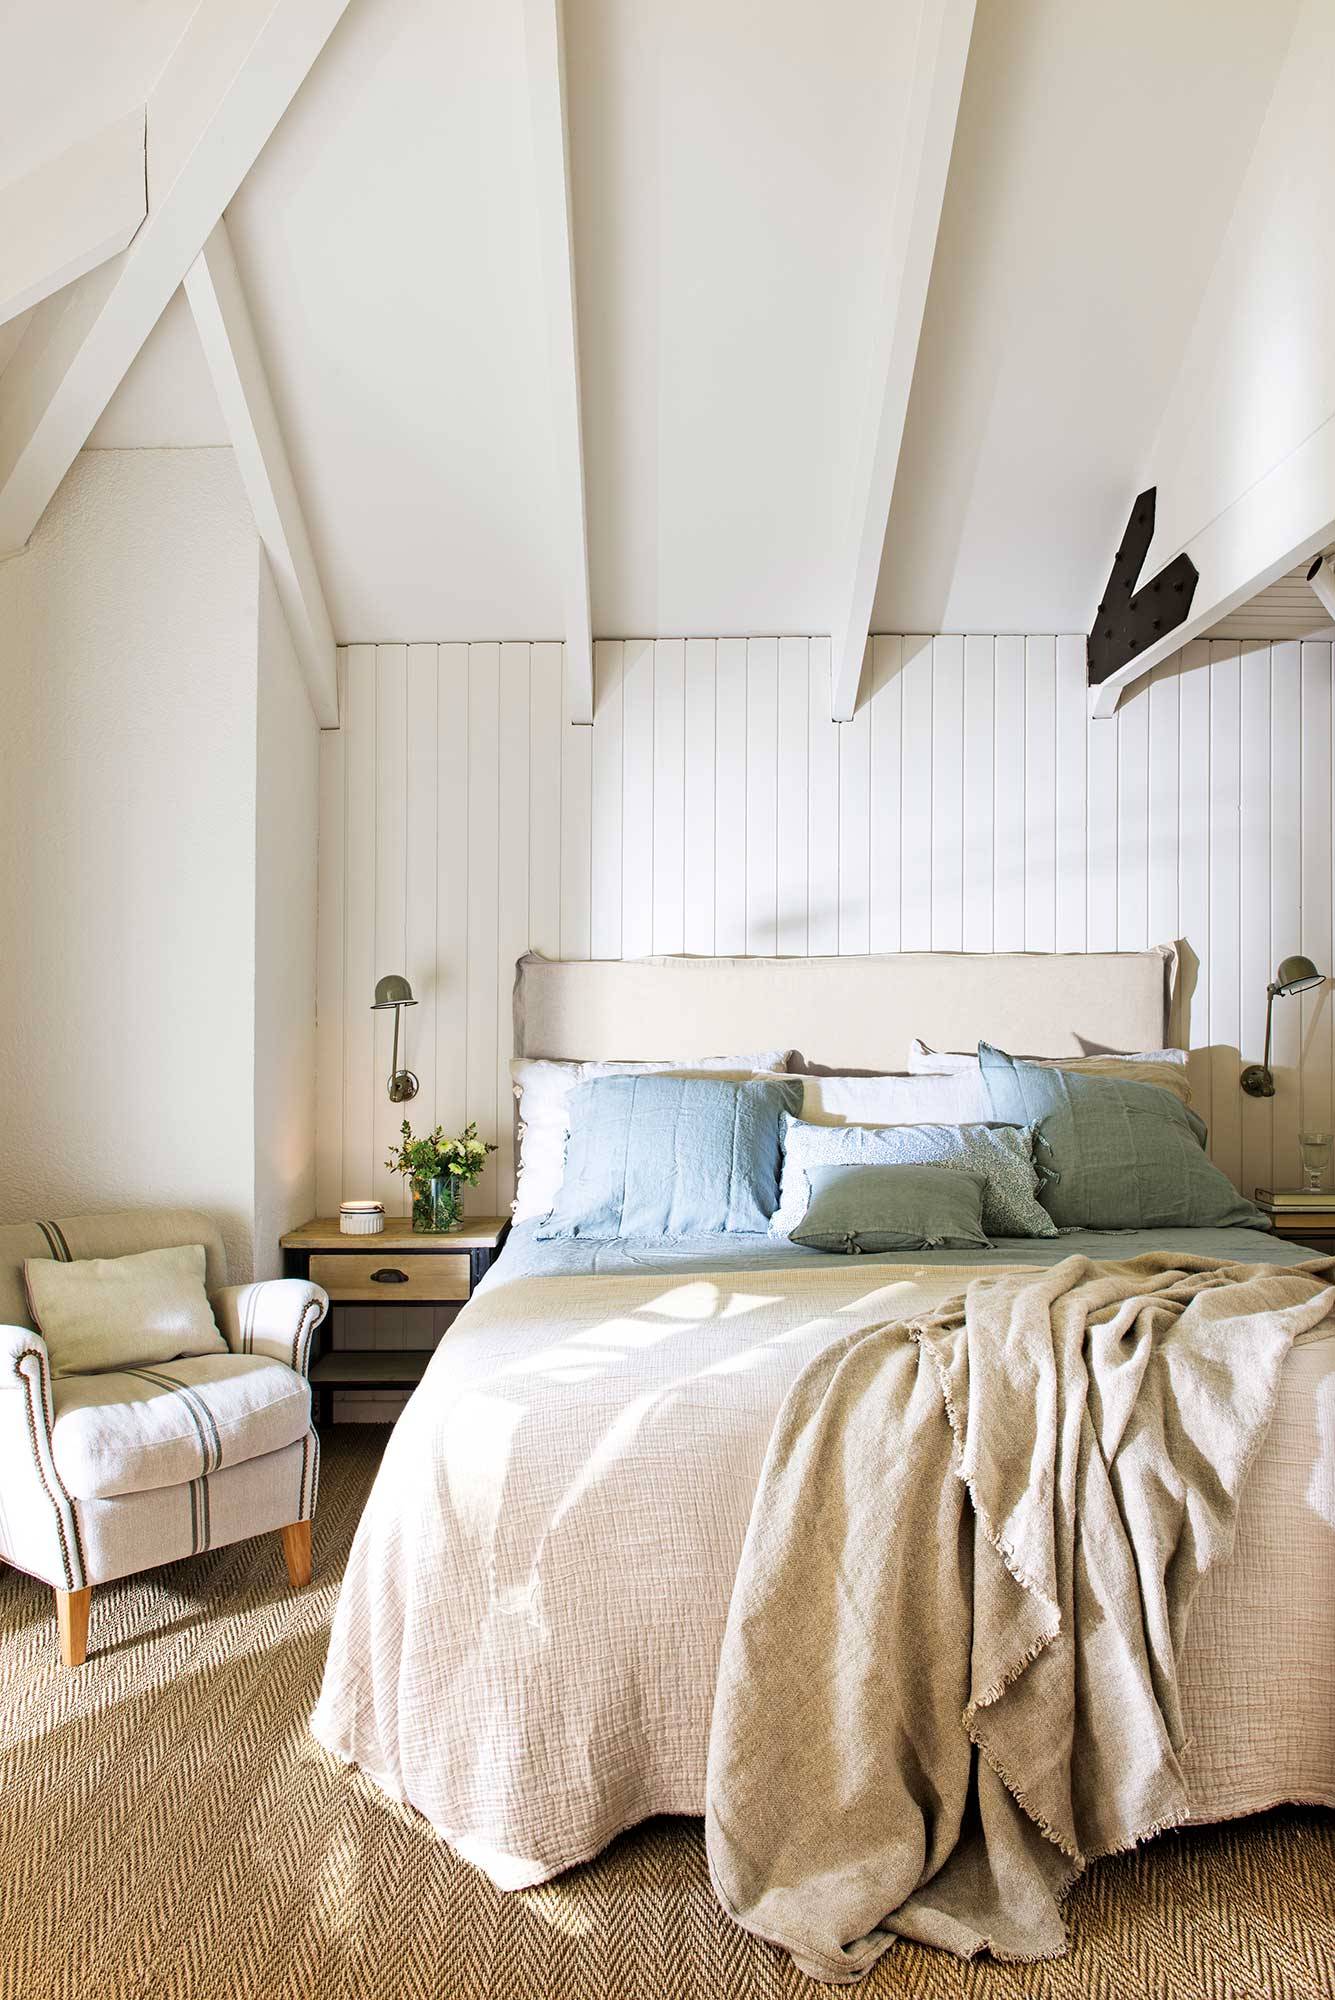 Dormitorio abuhardillado blanco con suelo de moqueta.